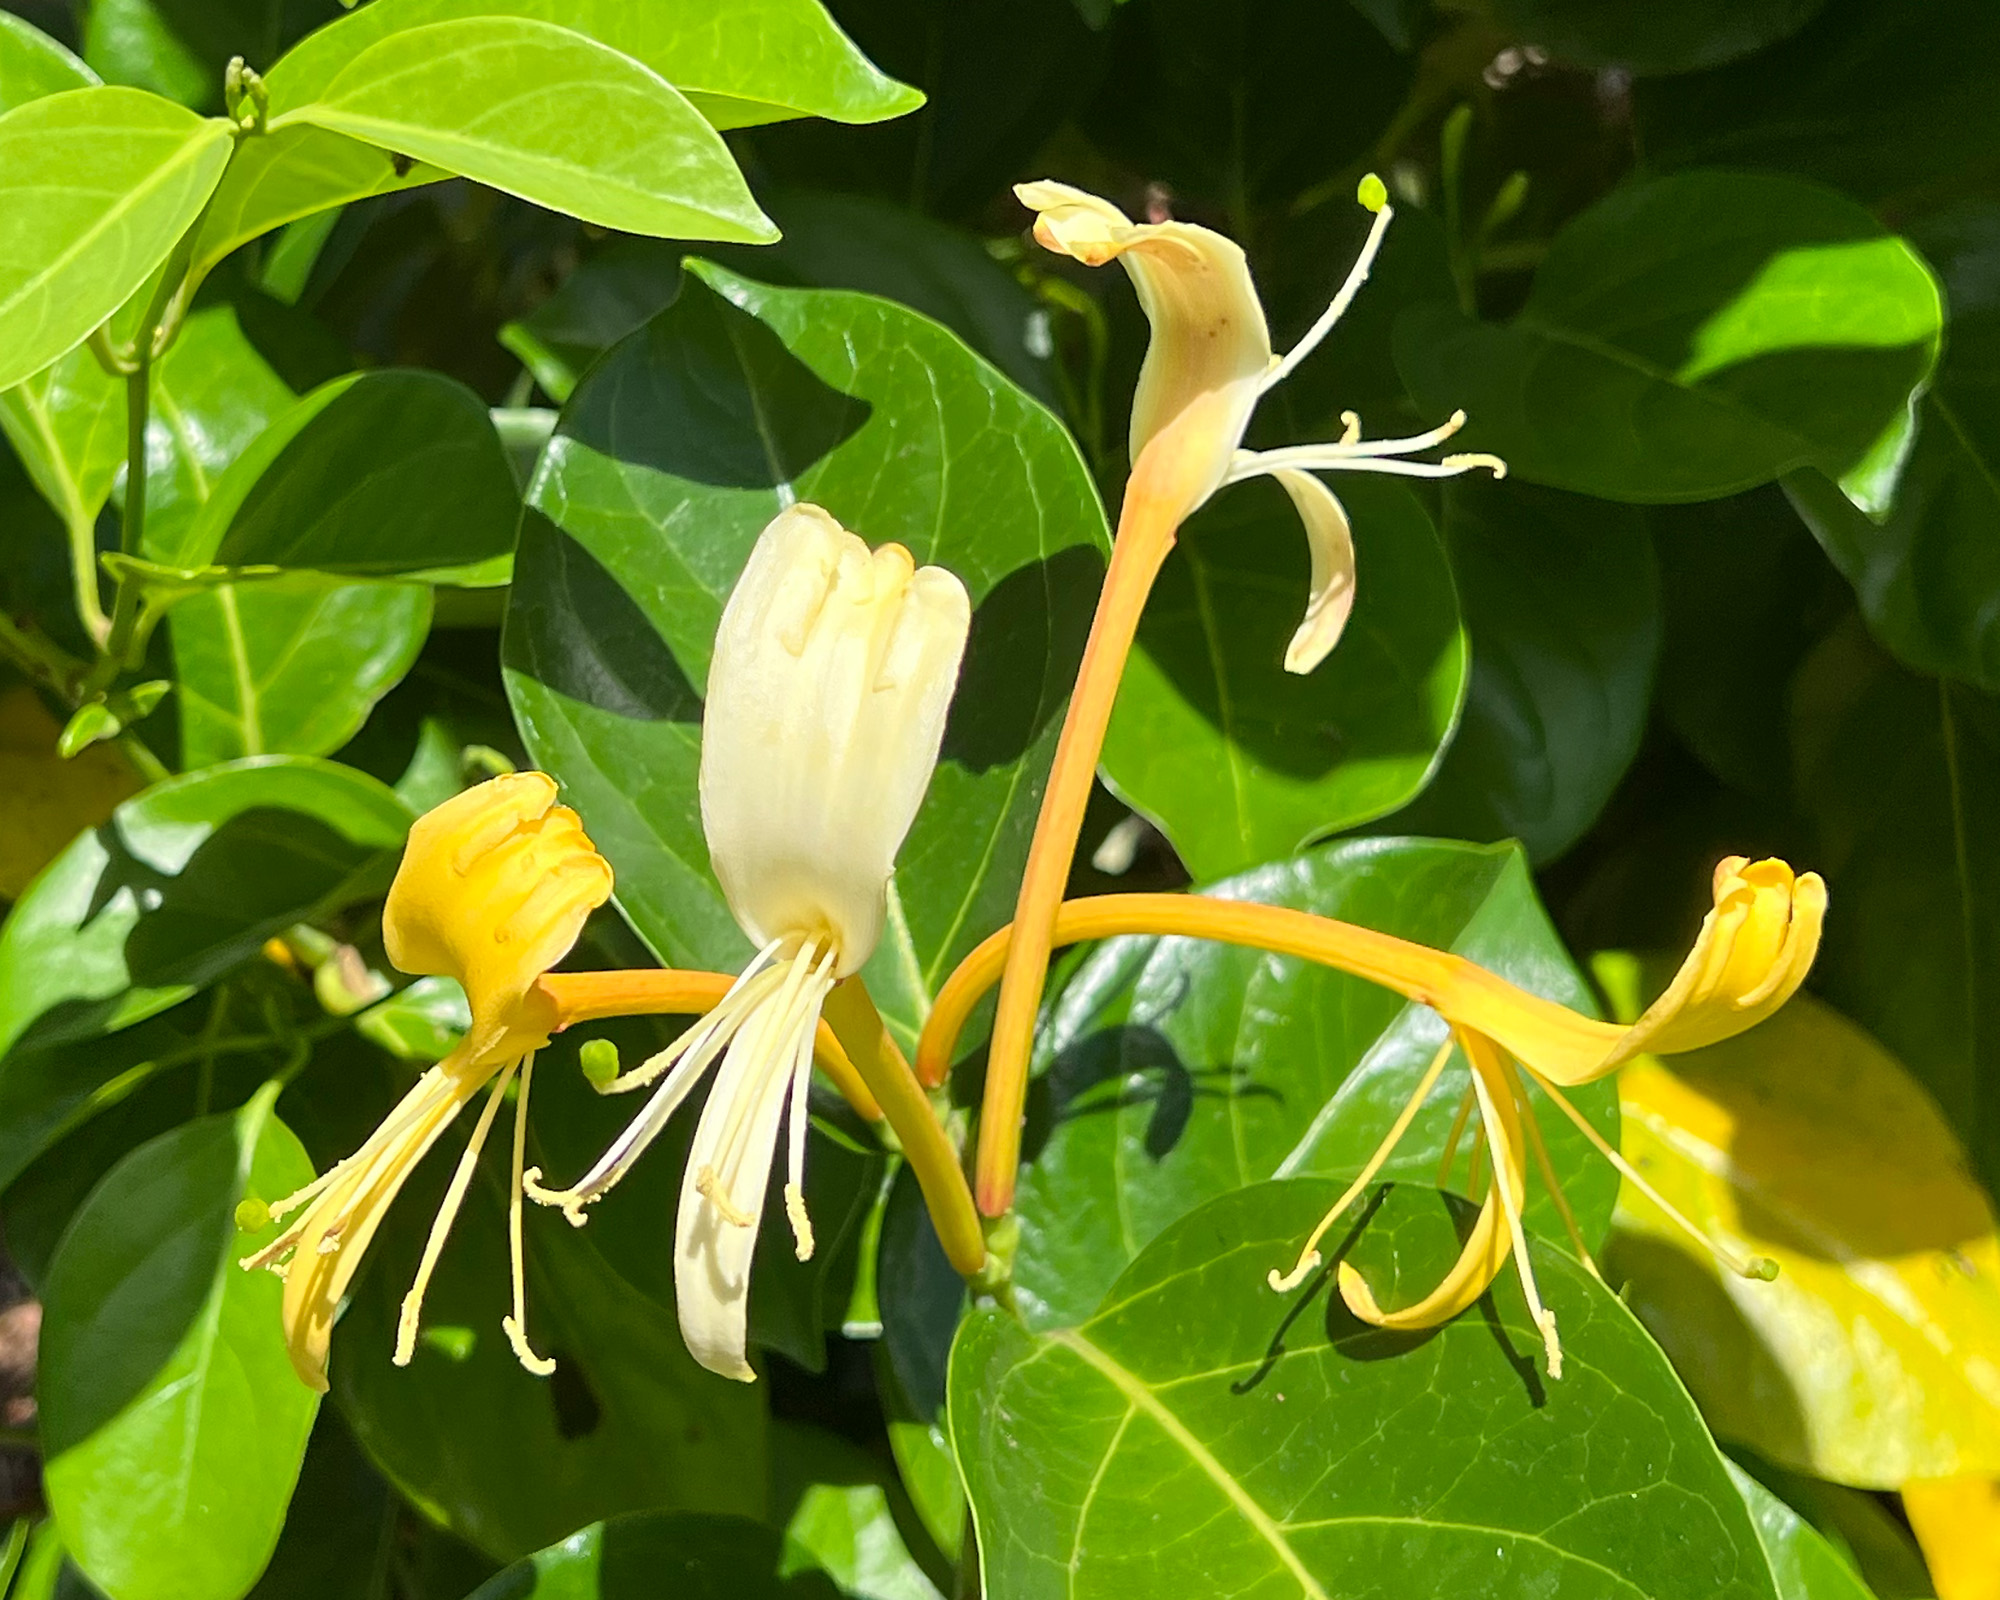 Lonicera hildebrandiana - has long tubular yellow flowers